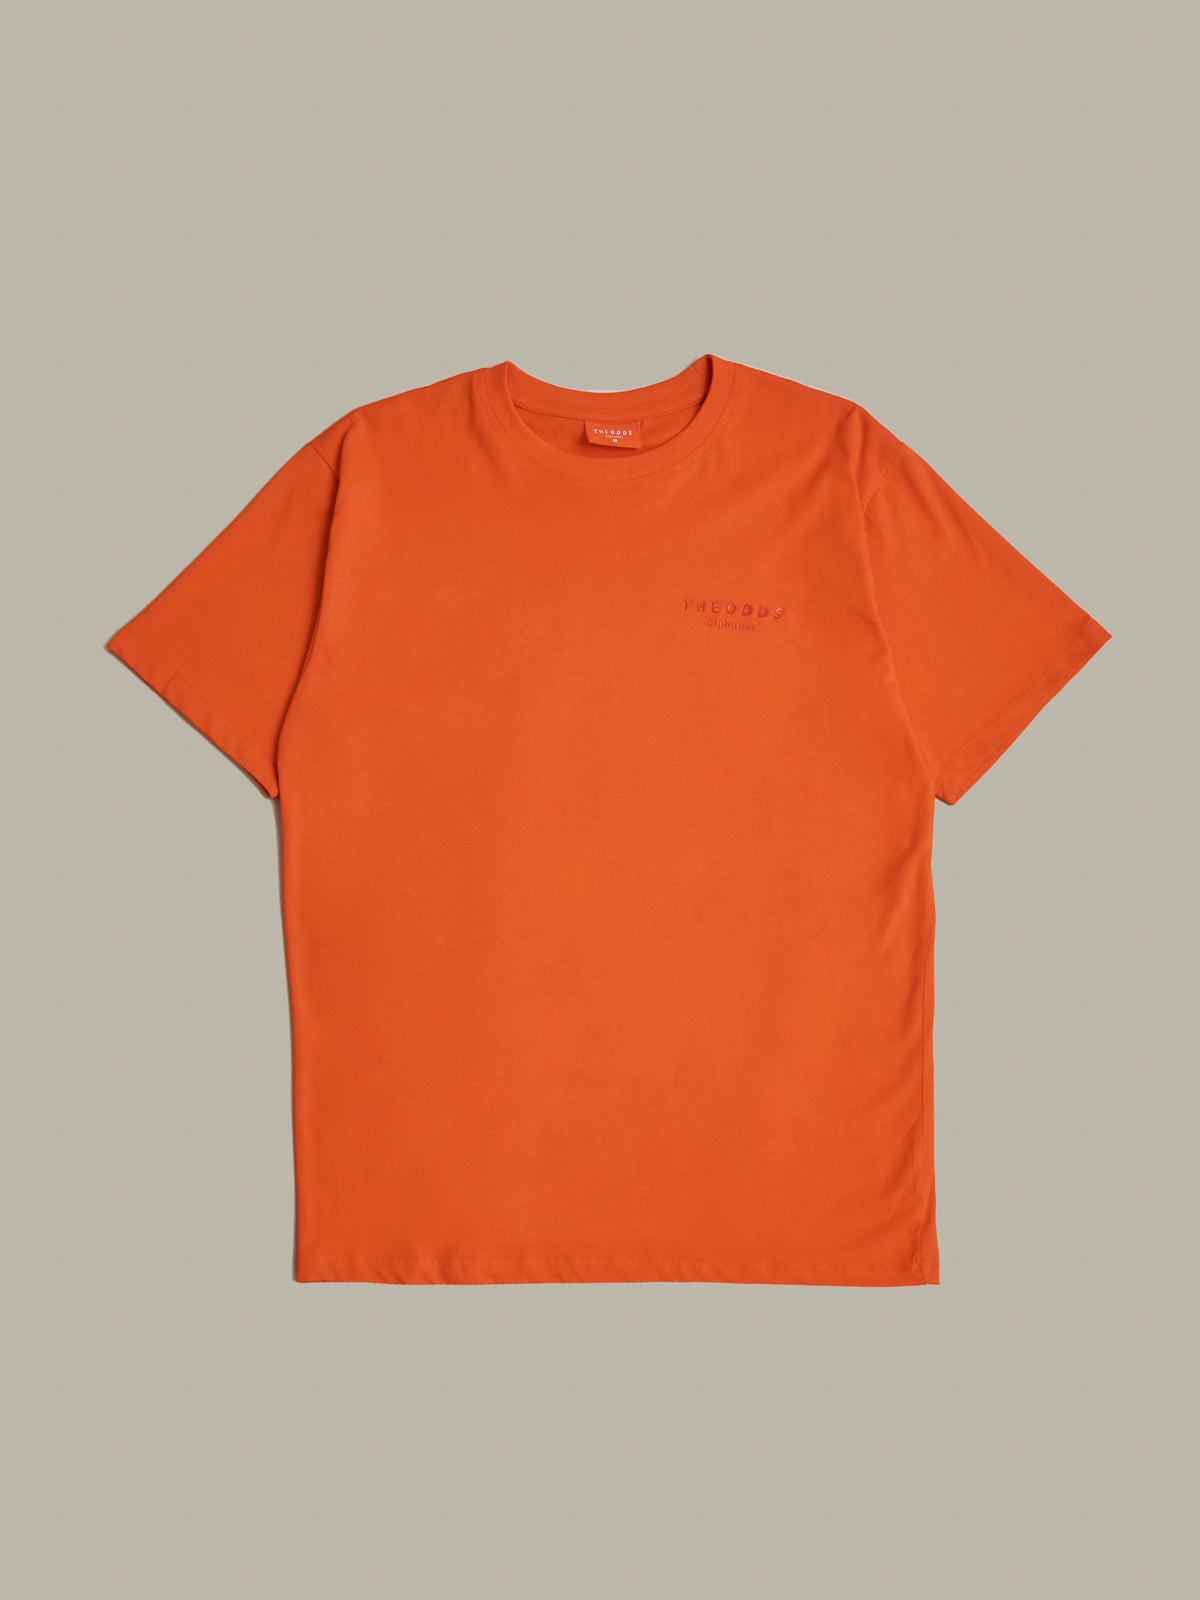 Odd Orange Regular Fit T-Shirt/ alphabet